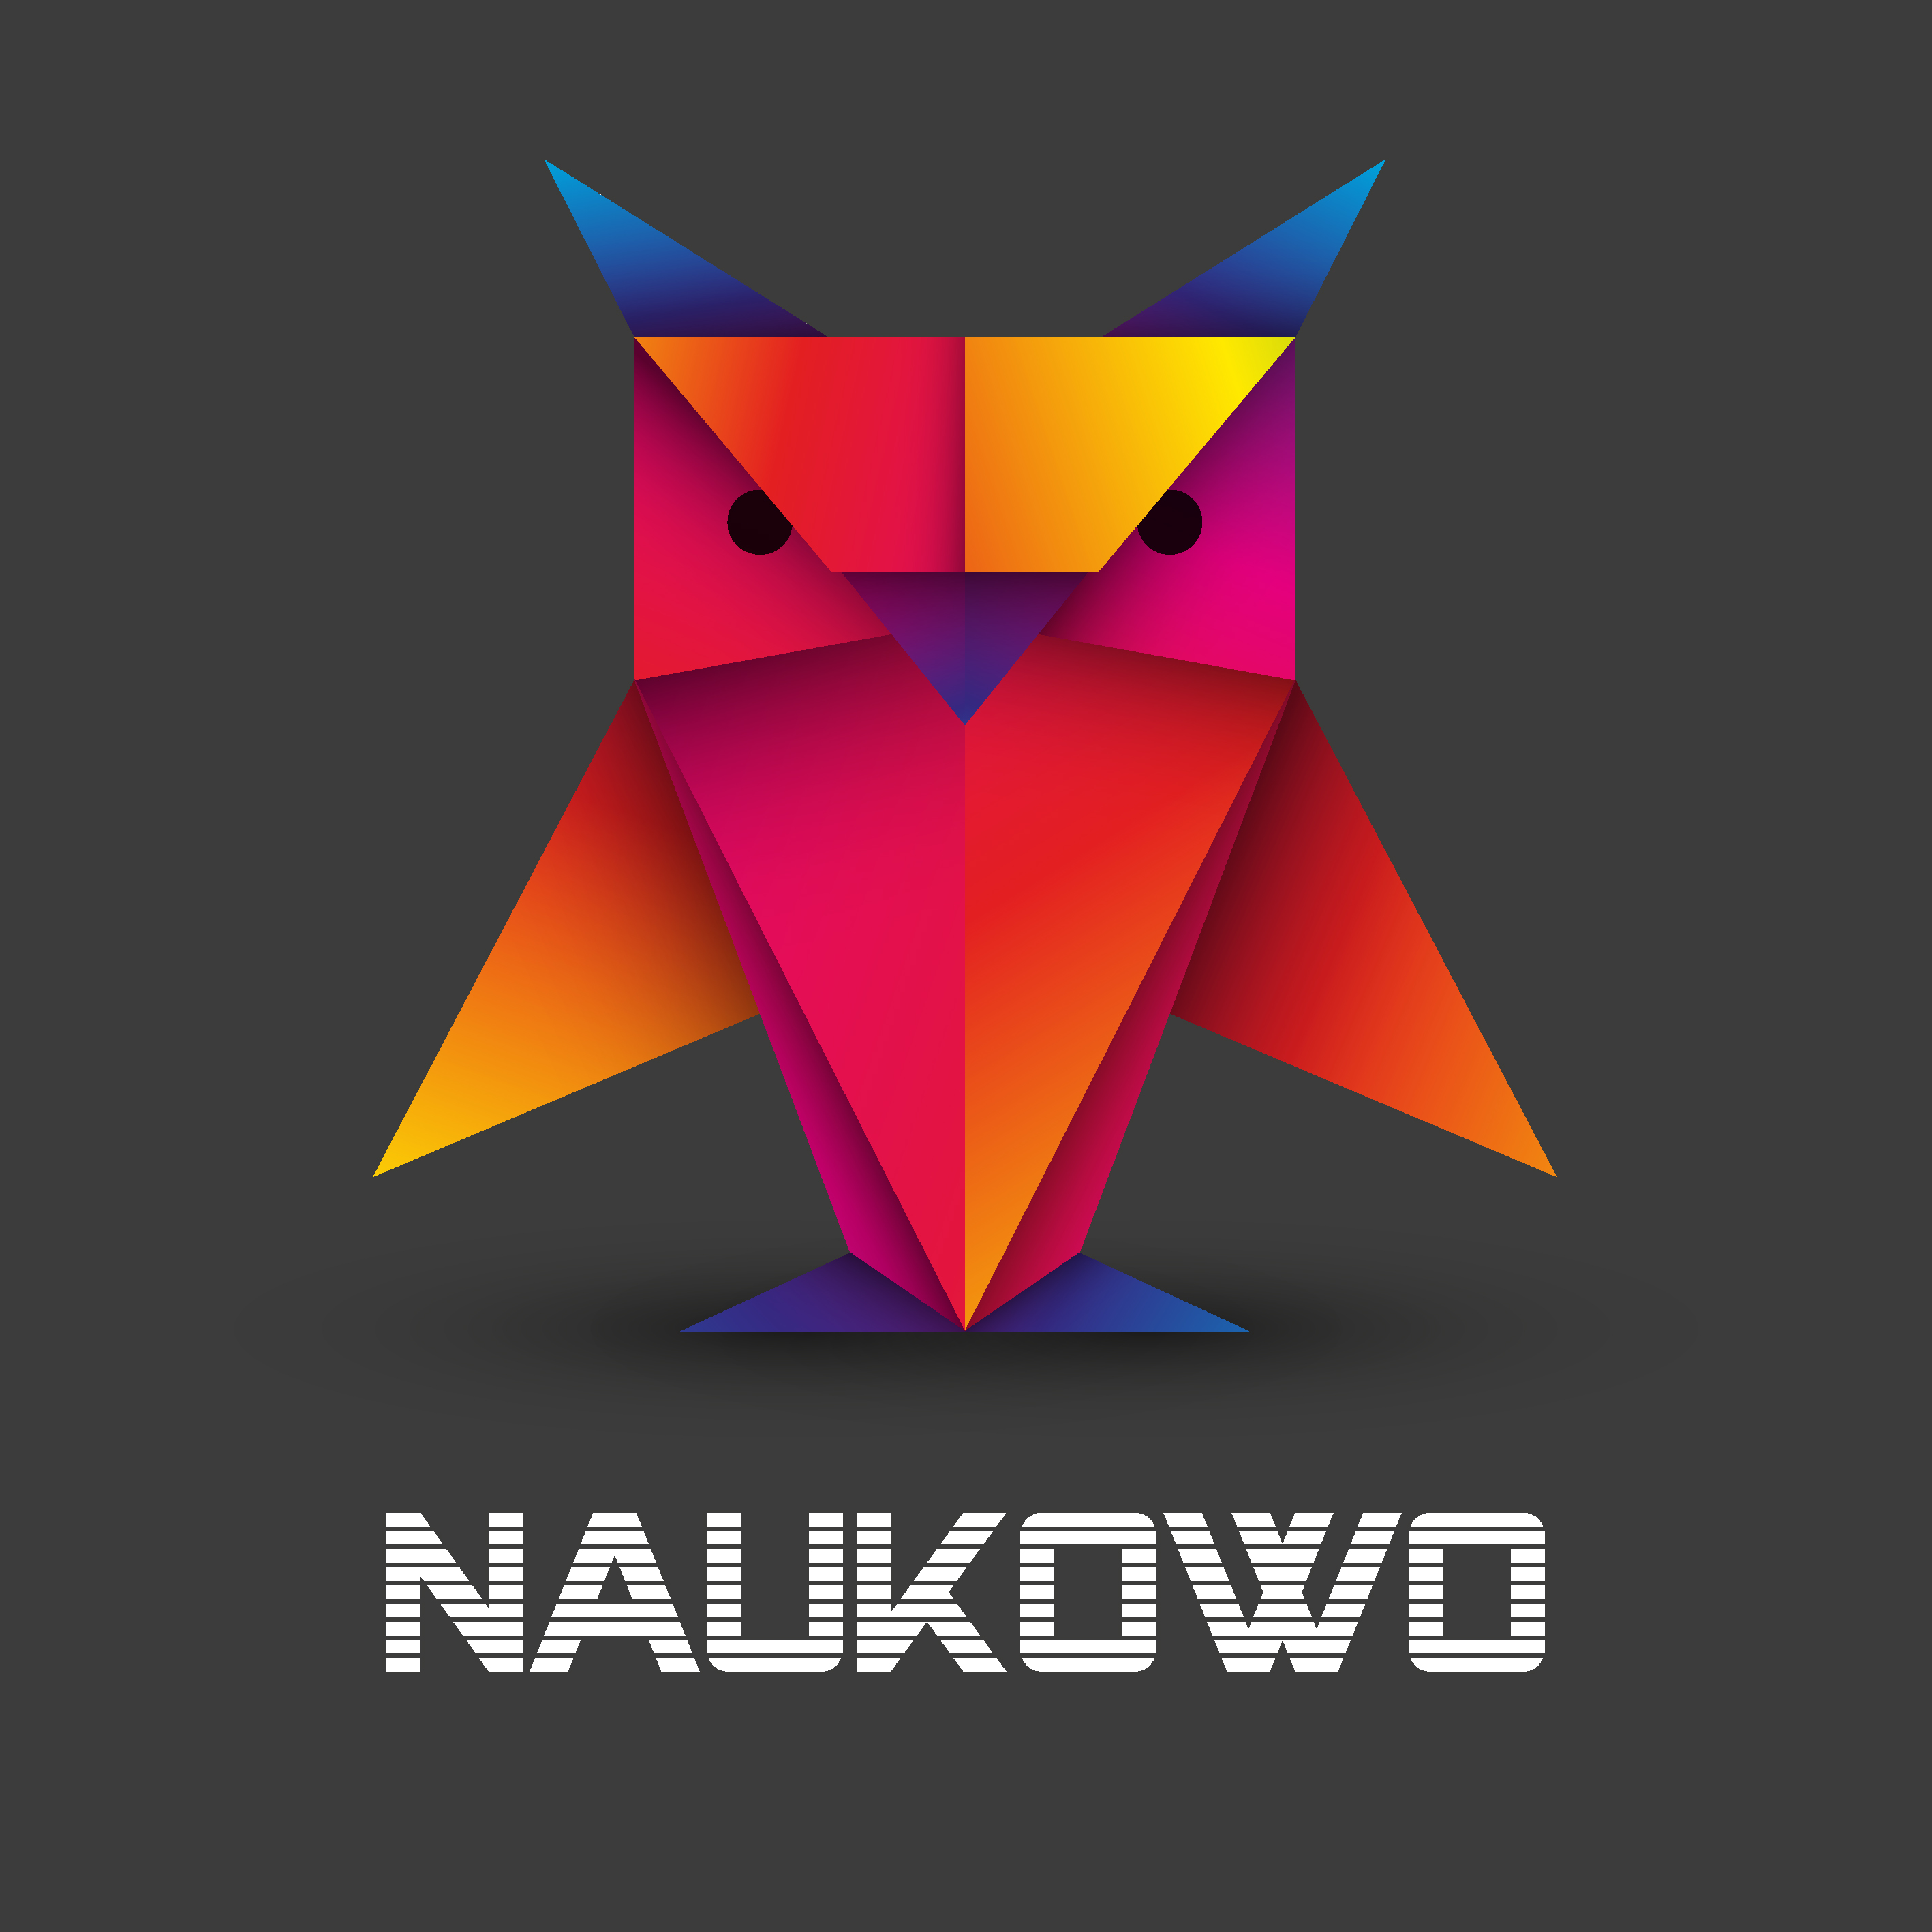 Artwork for podcast Naukowo